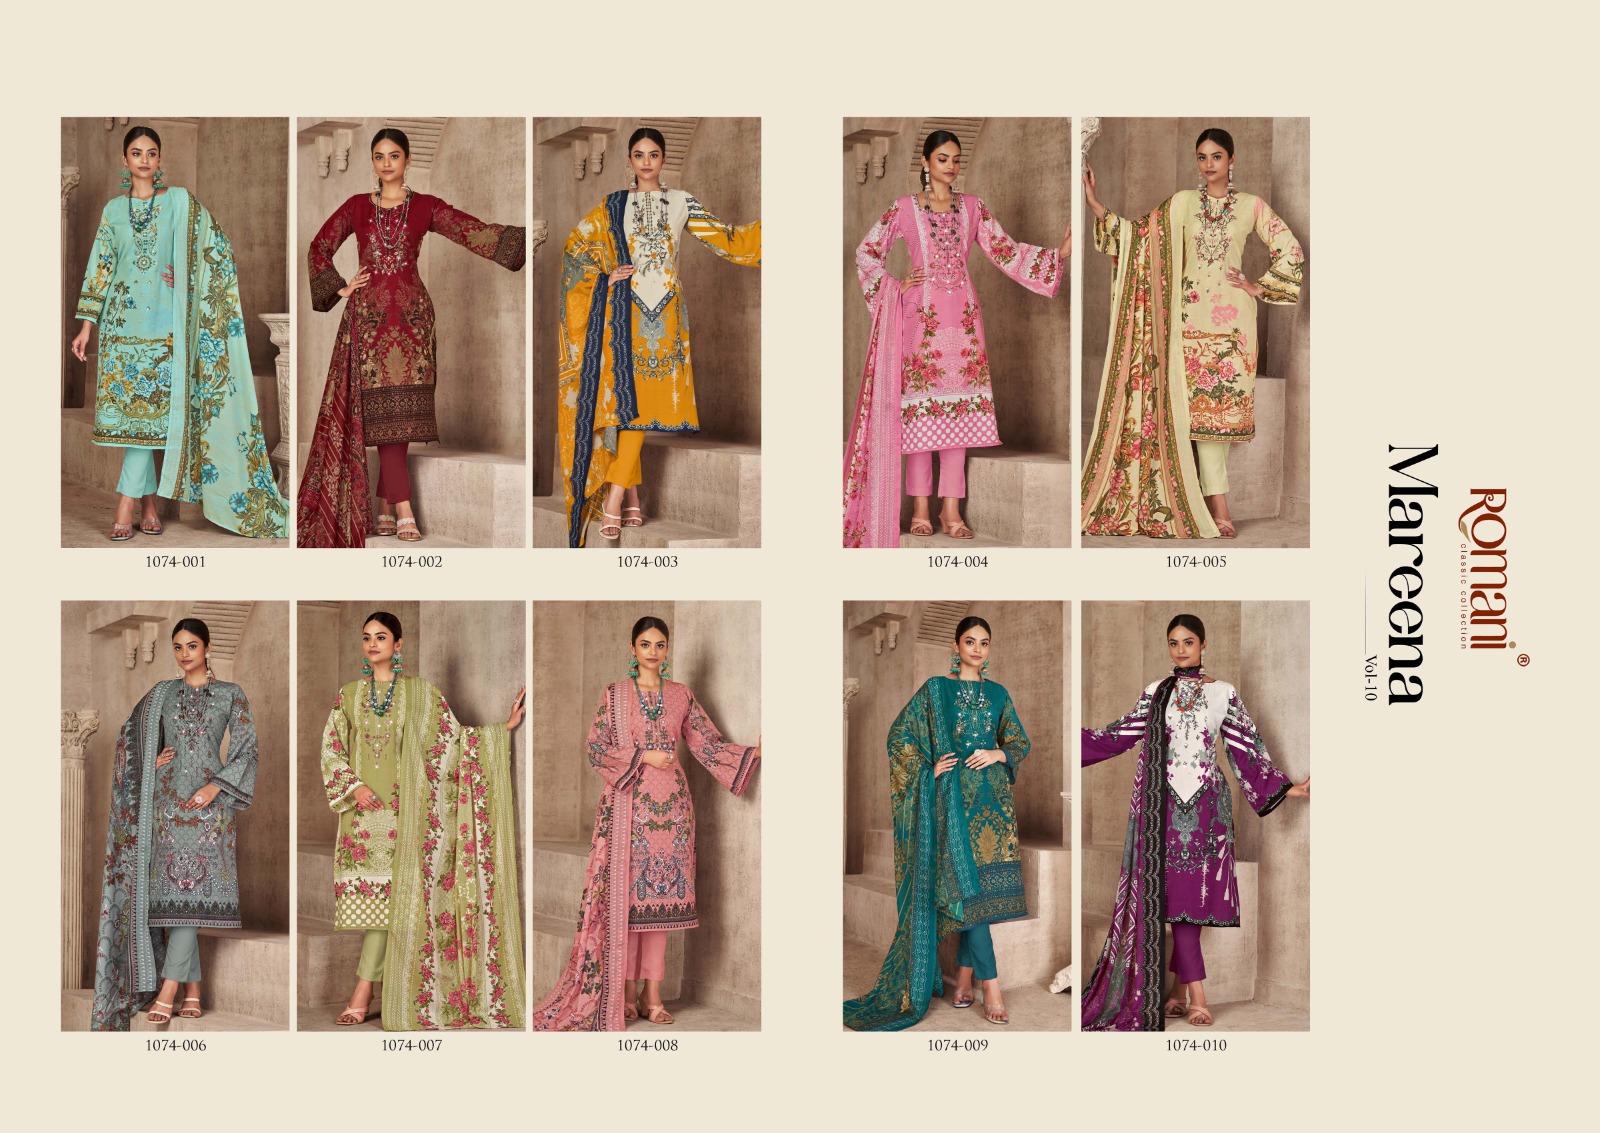 romani mareena vol 10 cotton regal look salwar suit catalog